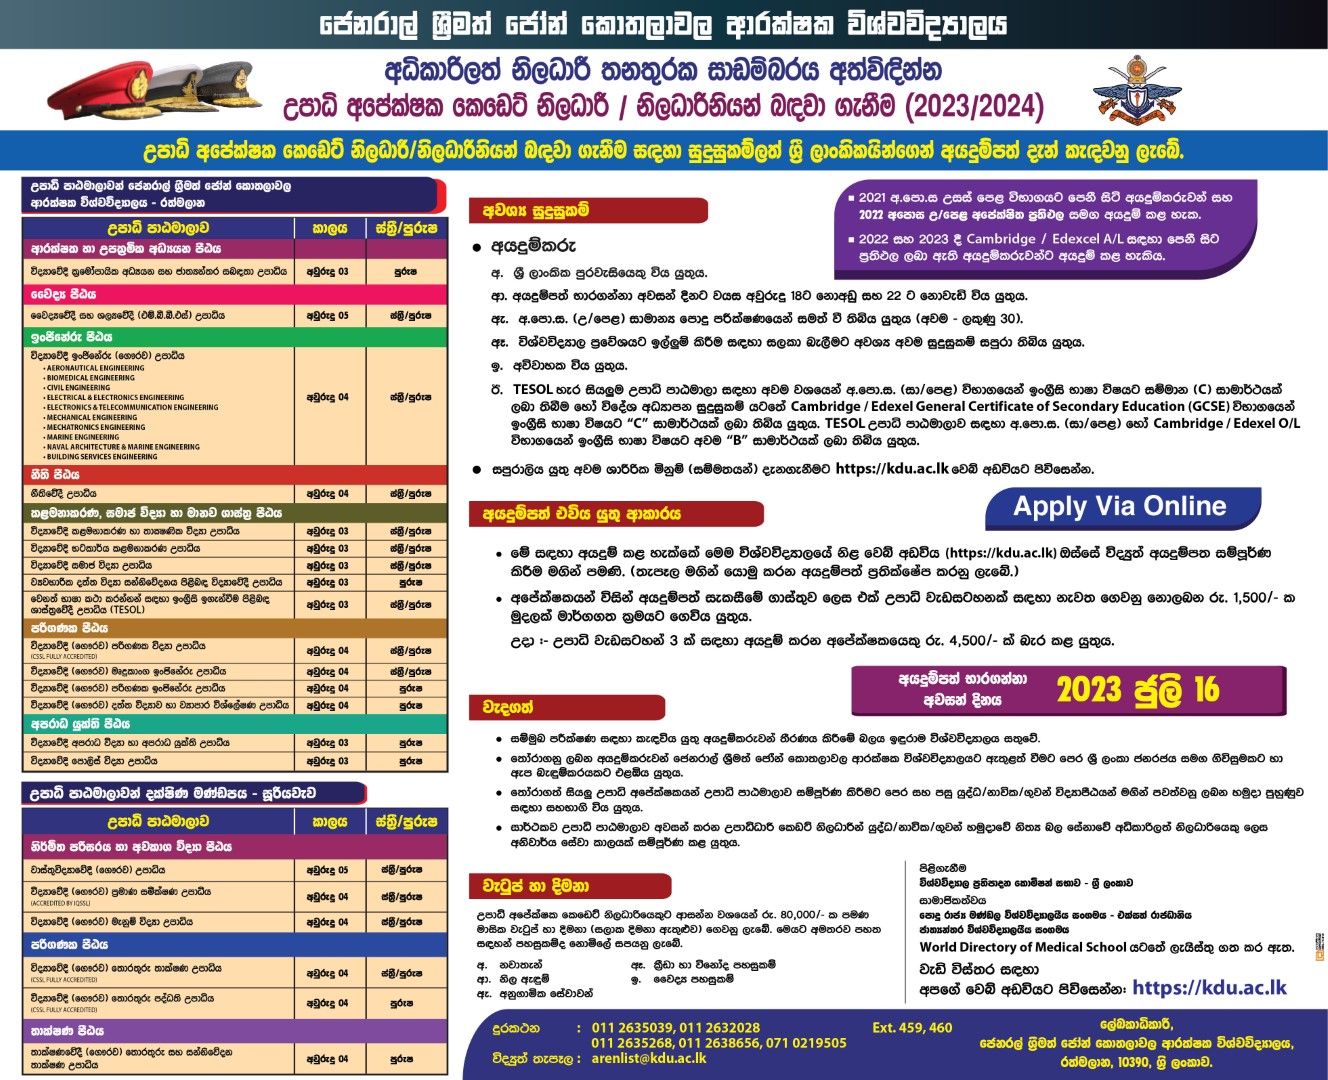 Admission for Degree Programmes (Cadetship) 2023/2024 (Intake 41) - Kotelawala Defence University (KDU)